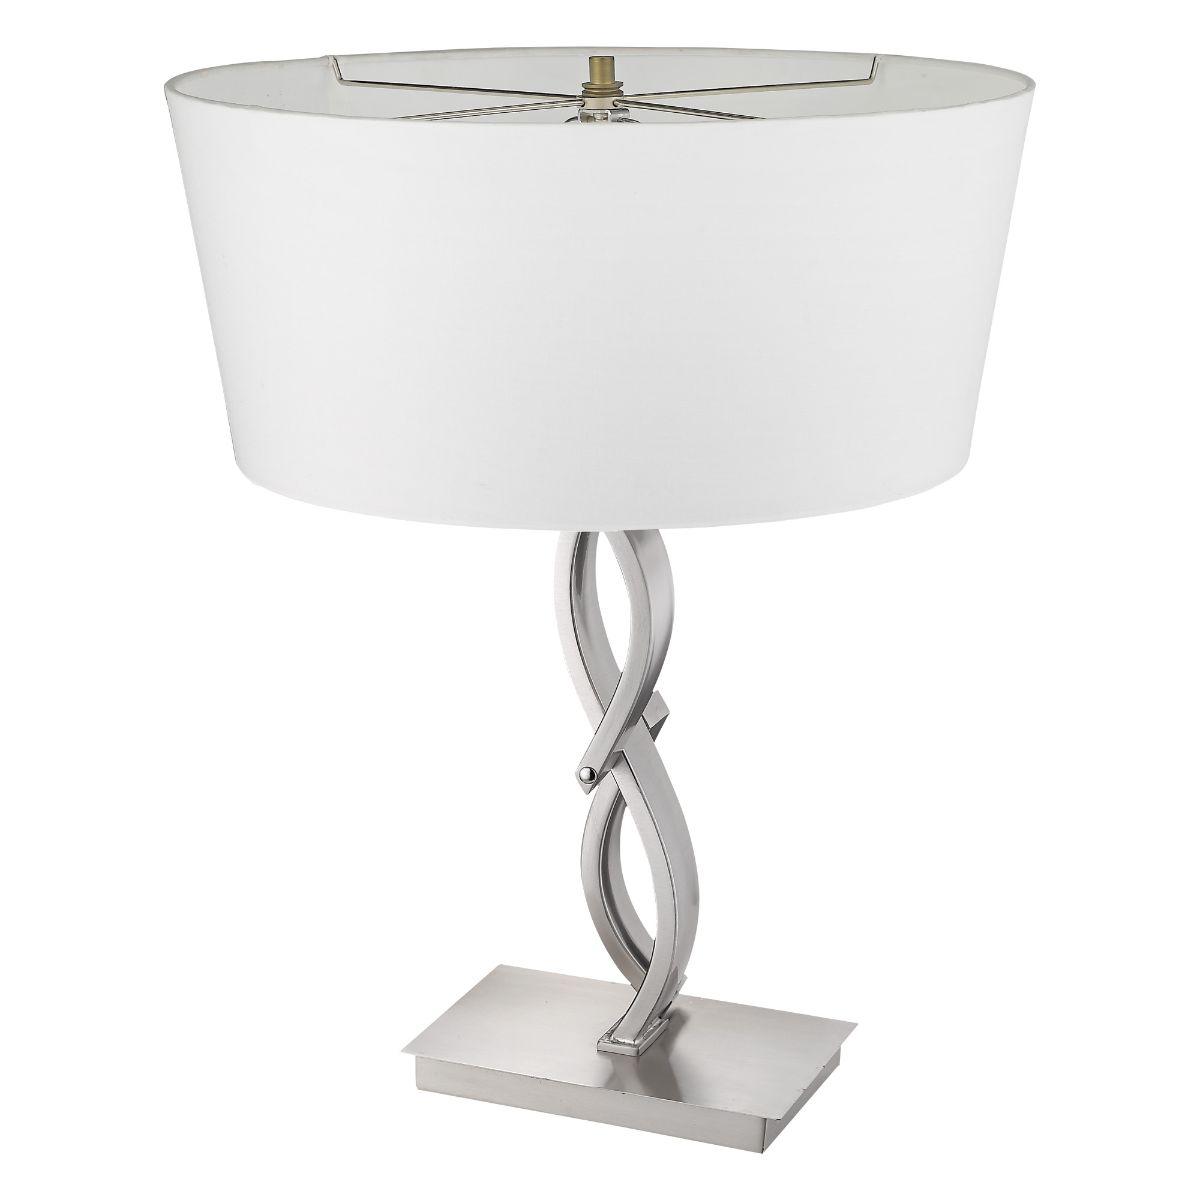 Trend Home 1 Light Table Lamp Satin Nickel Finish